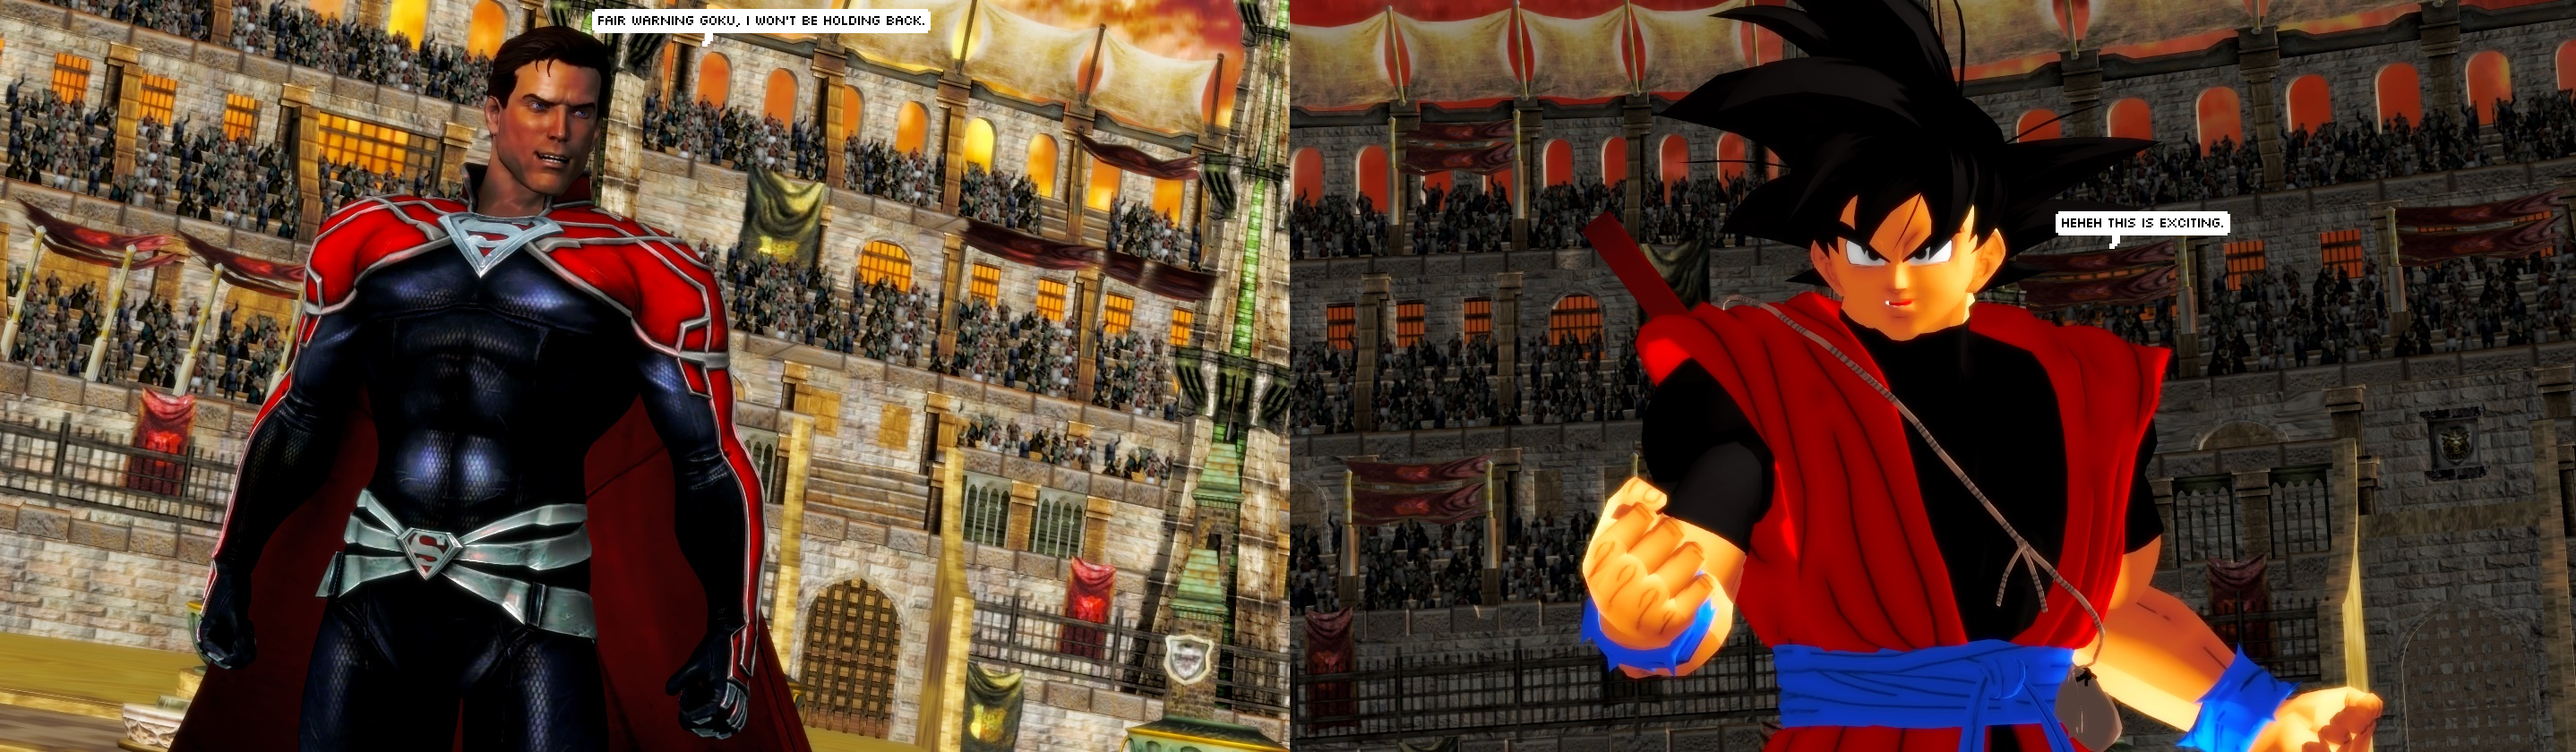 Goku In Video Games Evolution by TomBoy44 on DeviantArt